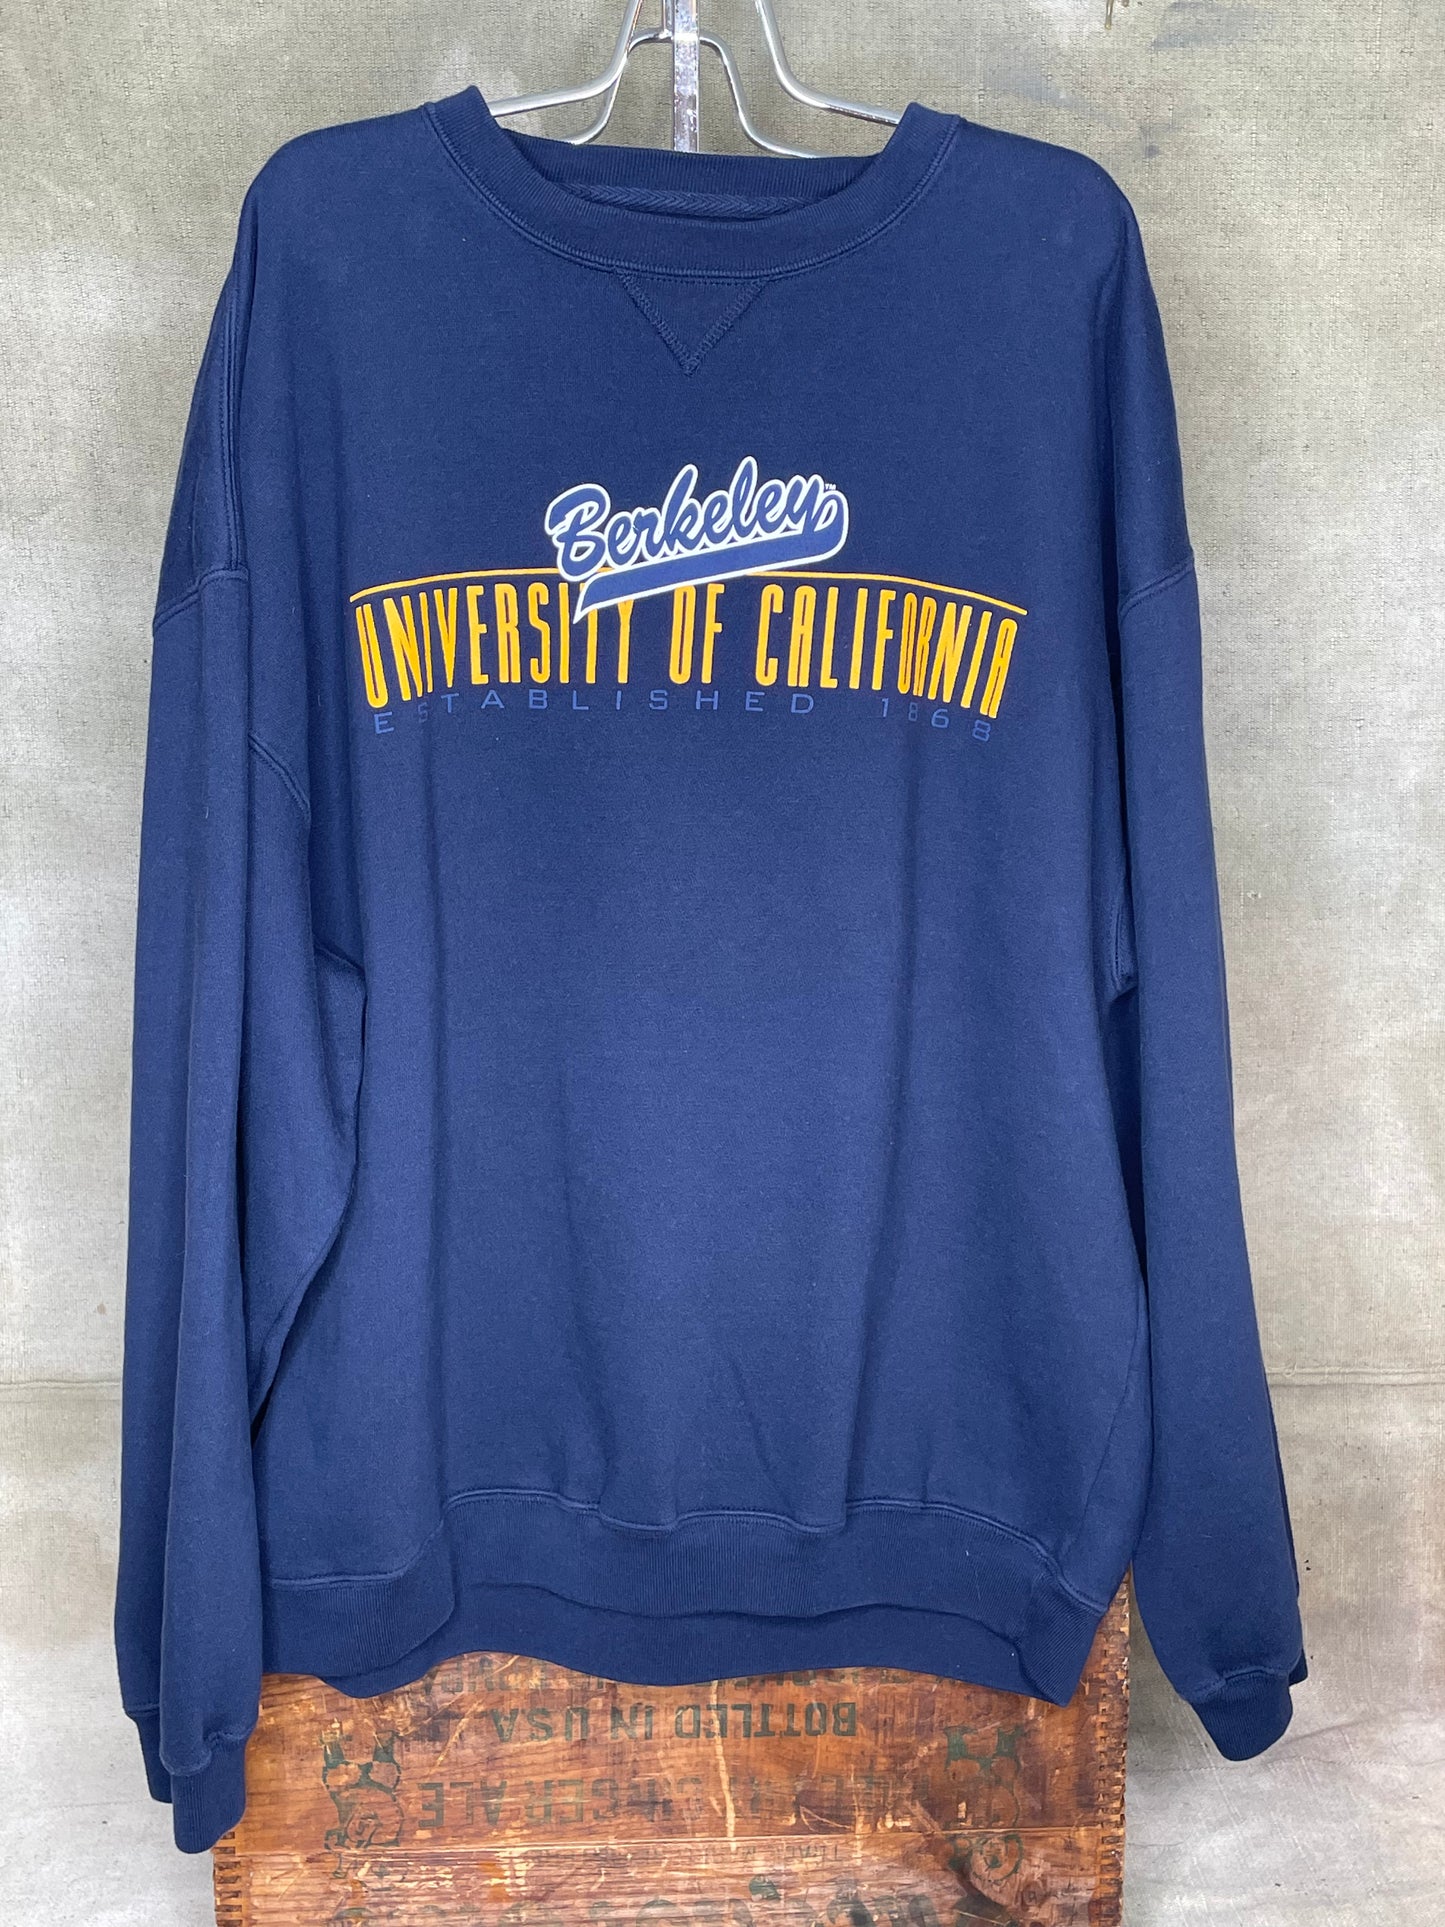 Vintage University of California Berkeley Bears College Sweatshirt XXL/XXXL